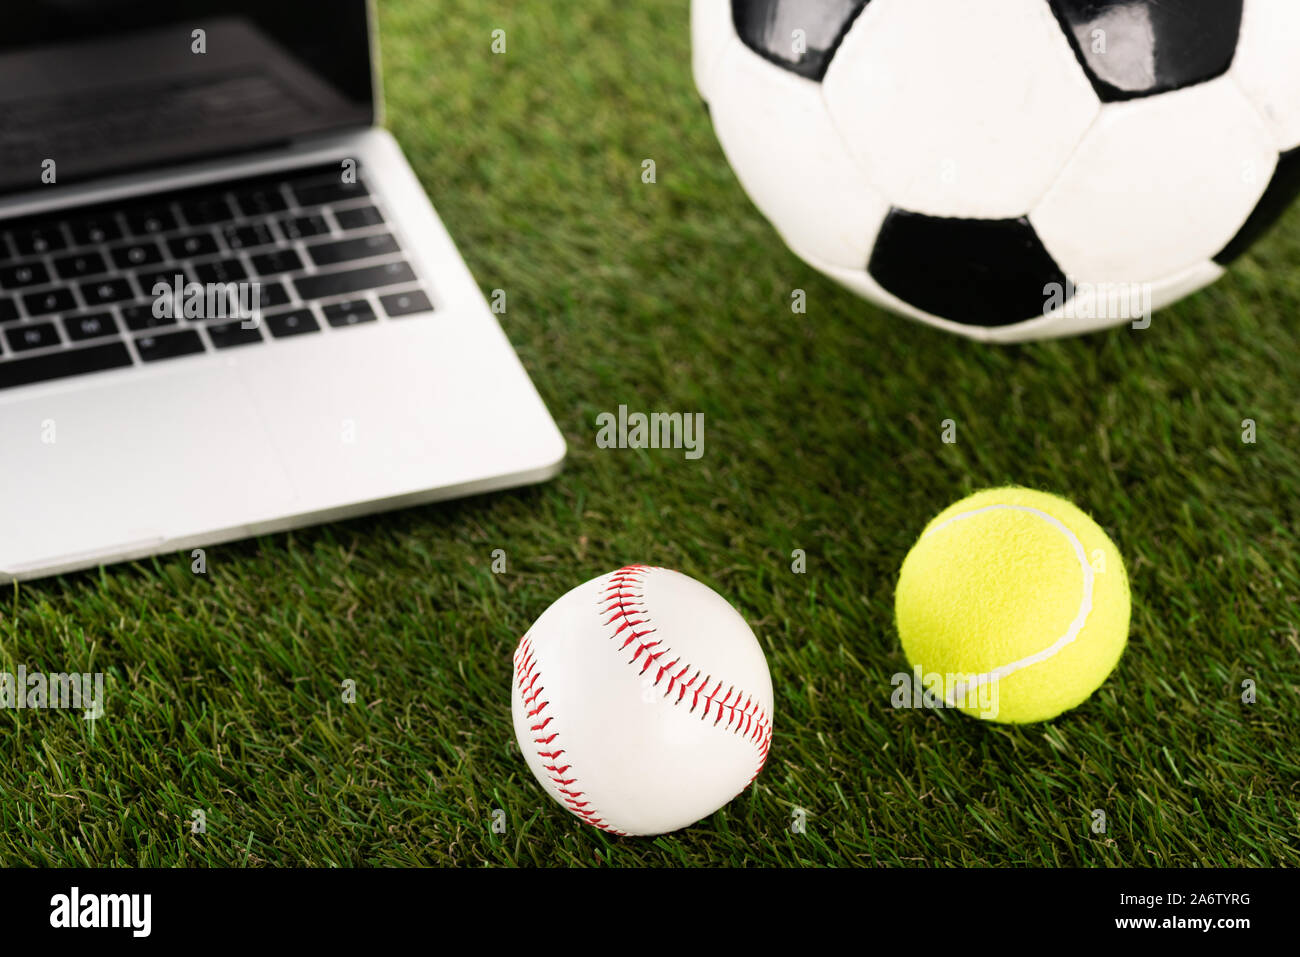 soccer, baseball and tennis balls near laptop on green grass, sports betting concept Stock Photo